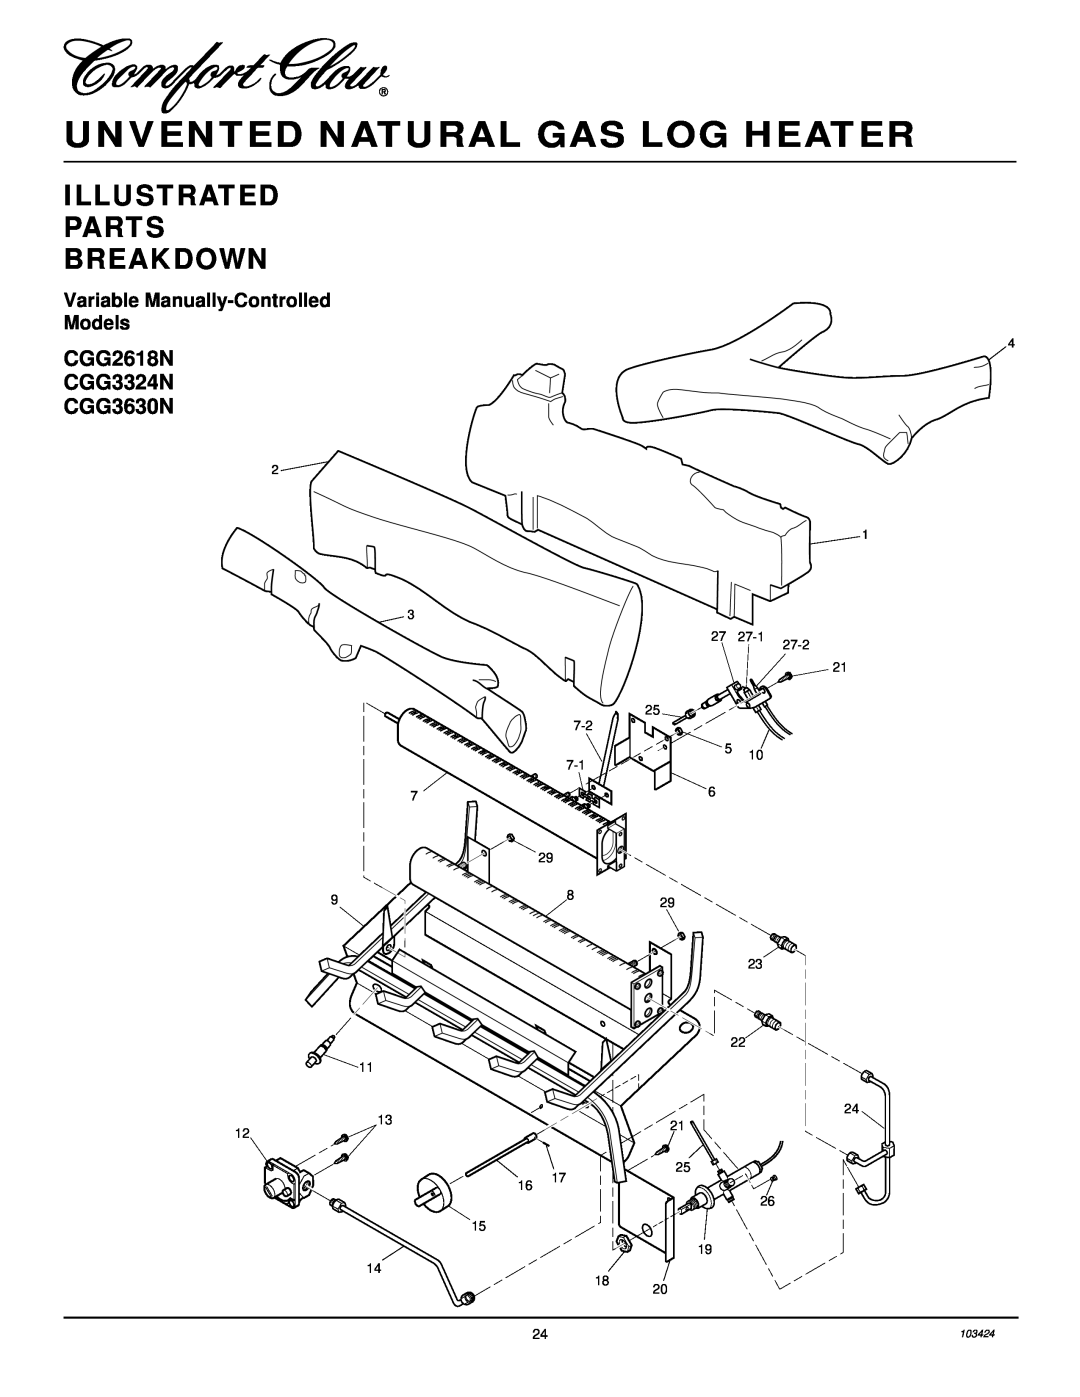 Desa CGG3324N(T) Illustrated Parts Breakdown, CGG2618N CGG3324N CGG3630N, Unvented Natural Gas Log Heater 